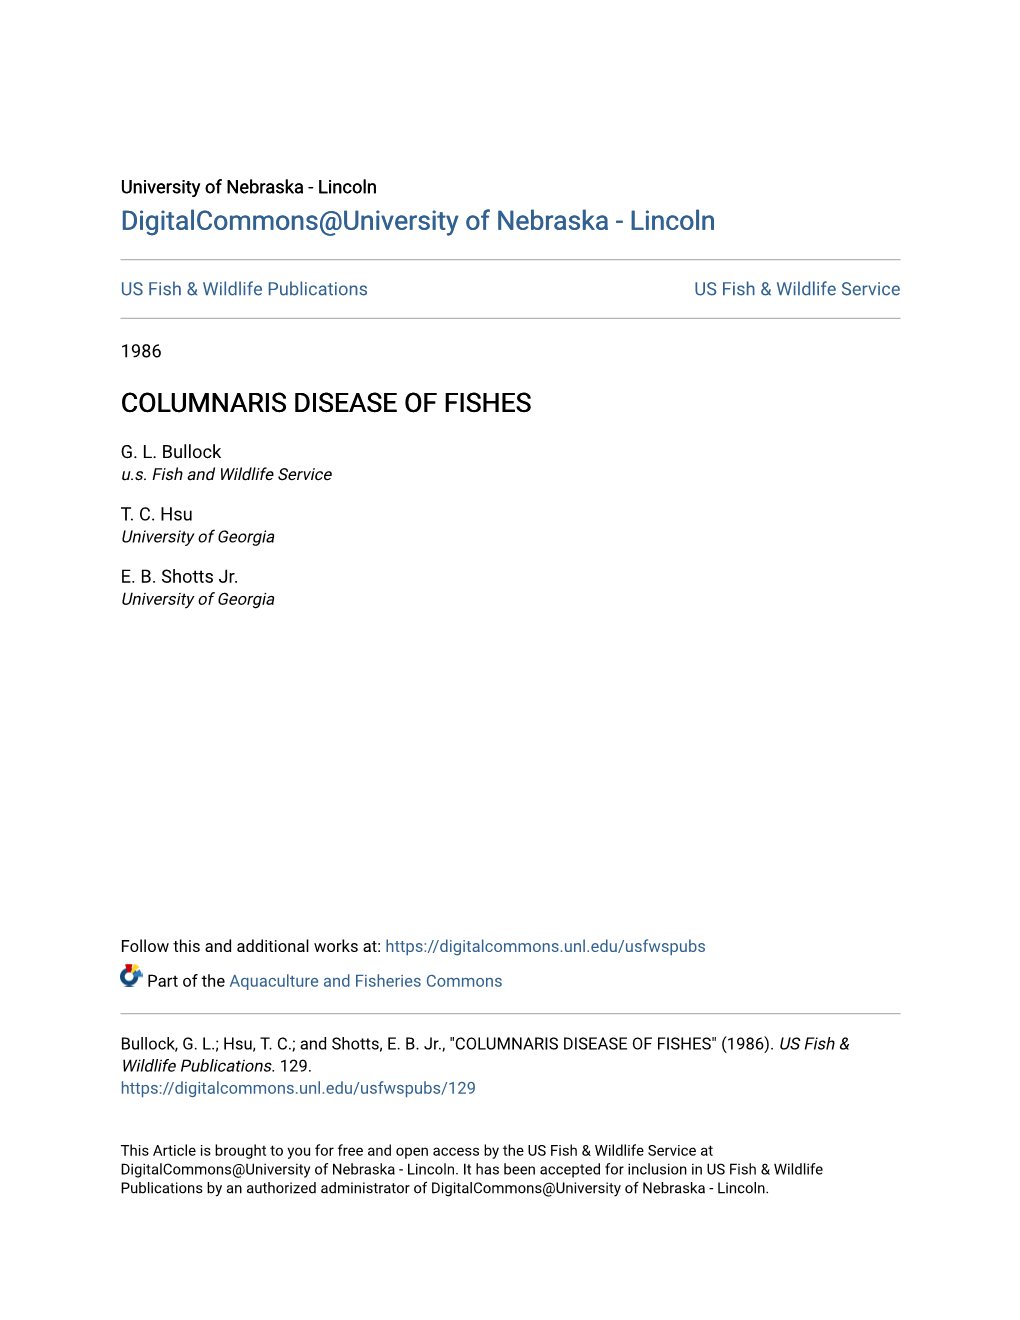 Columnaris Disease of Fishes